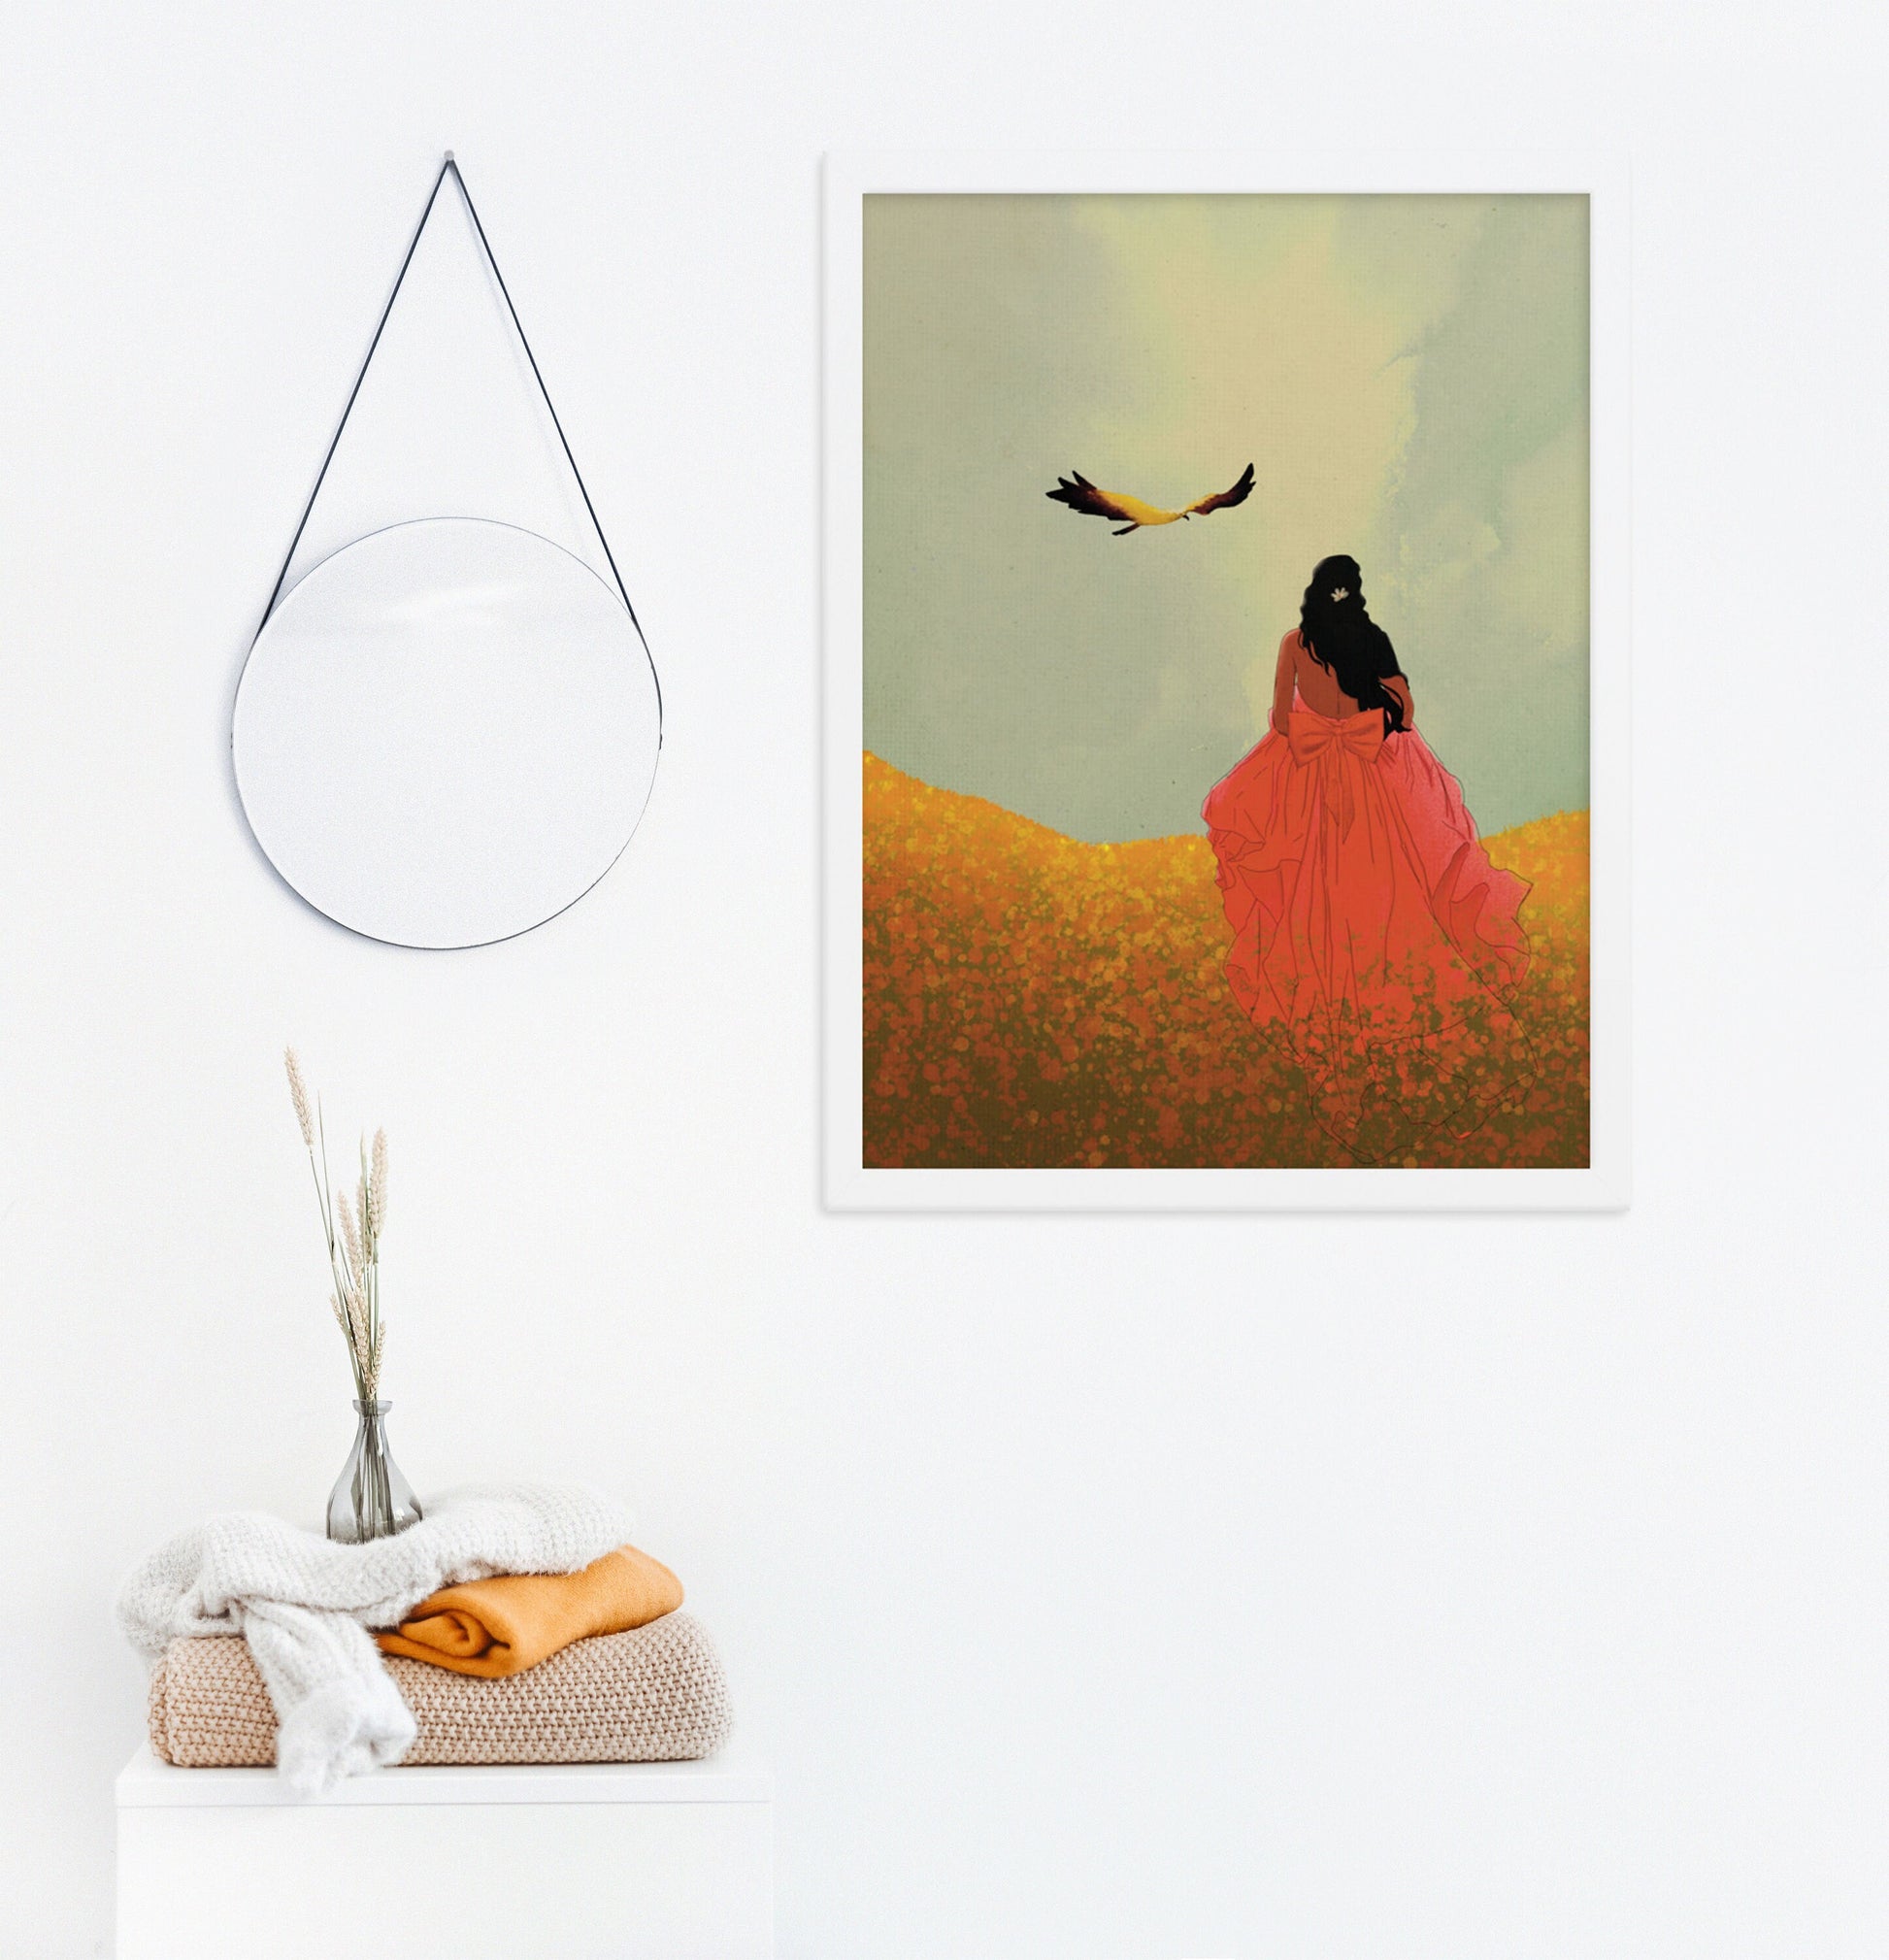 Woman in bright red dress in yellow, orange flower field & a bird flying in blue sky in white frame